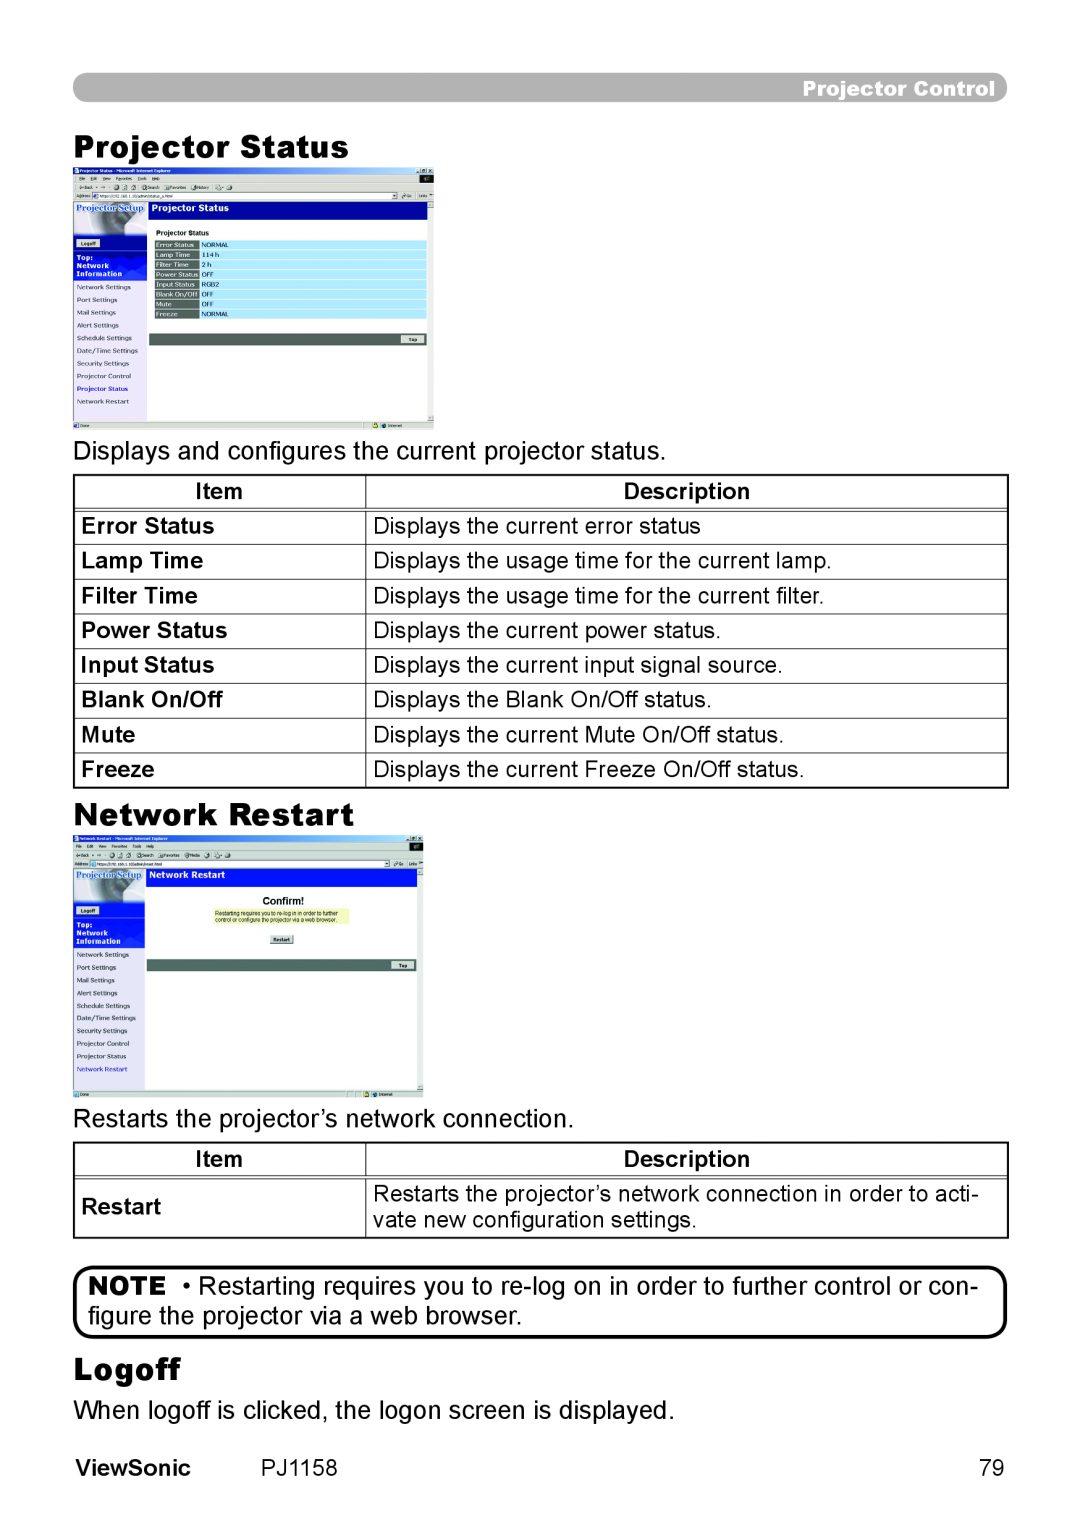 ViewSonic PJ1158 manual Projector Status, Network Restart, Logoff 